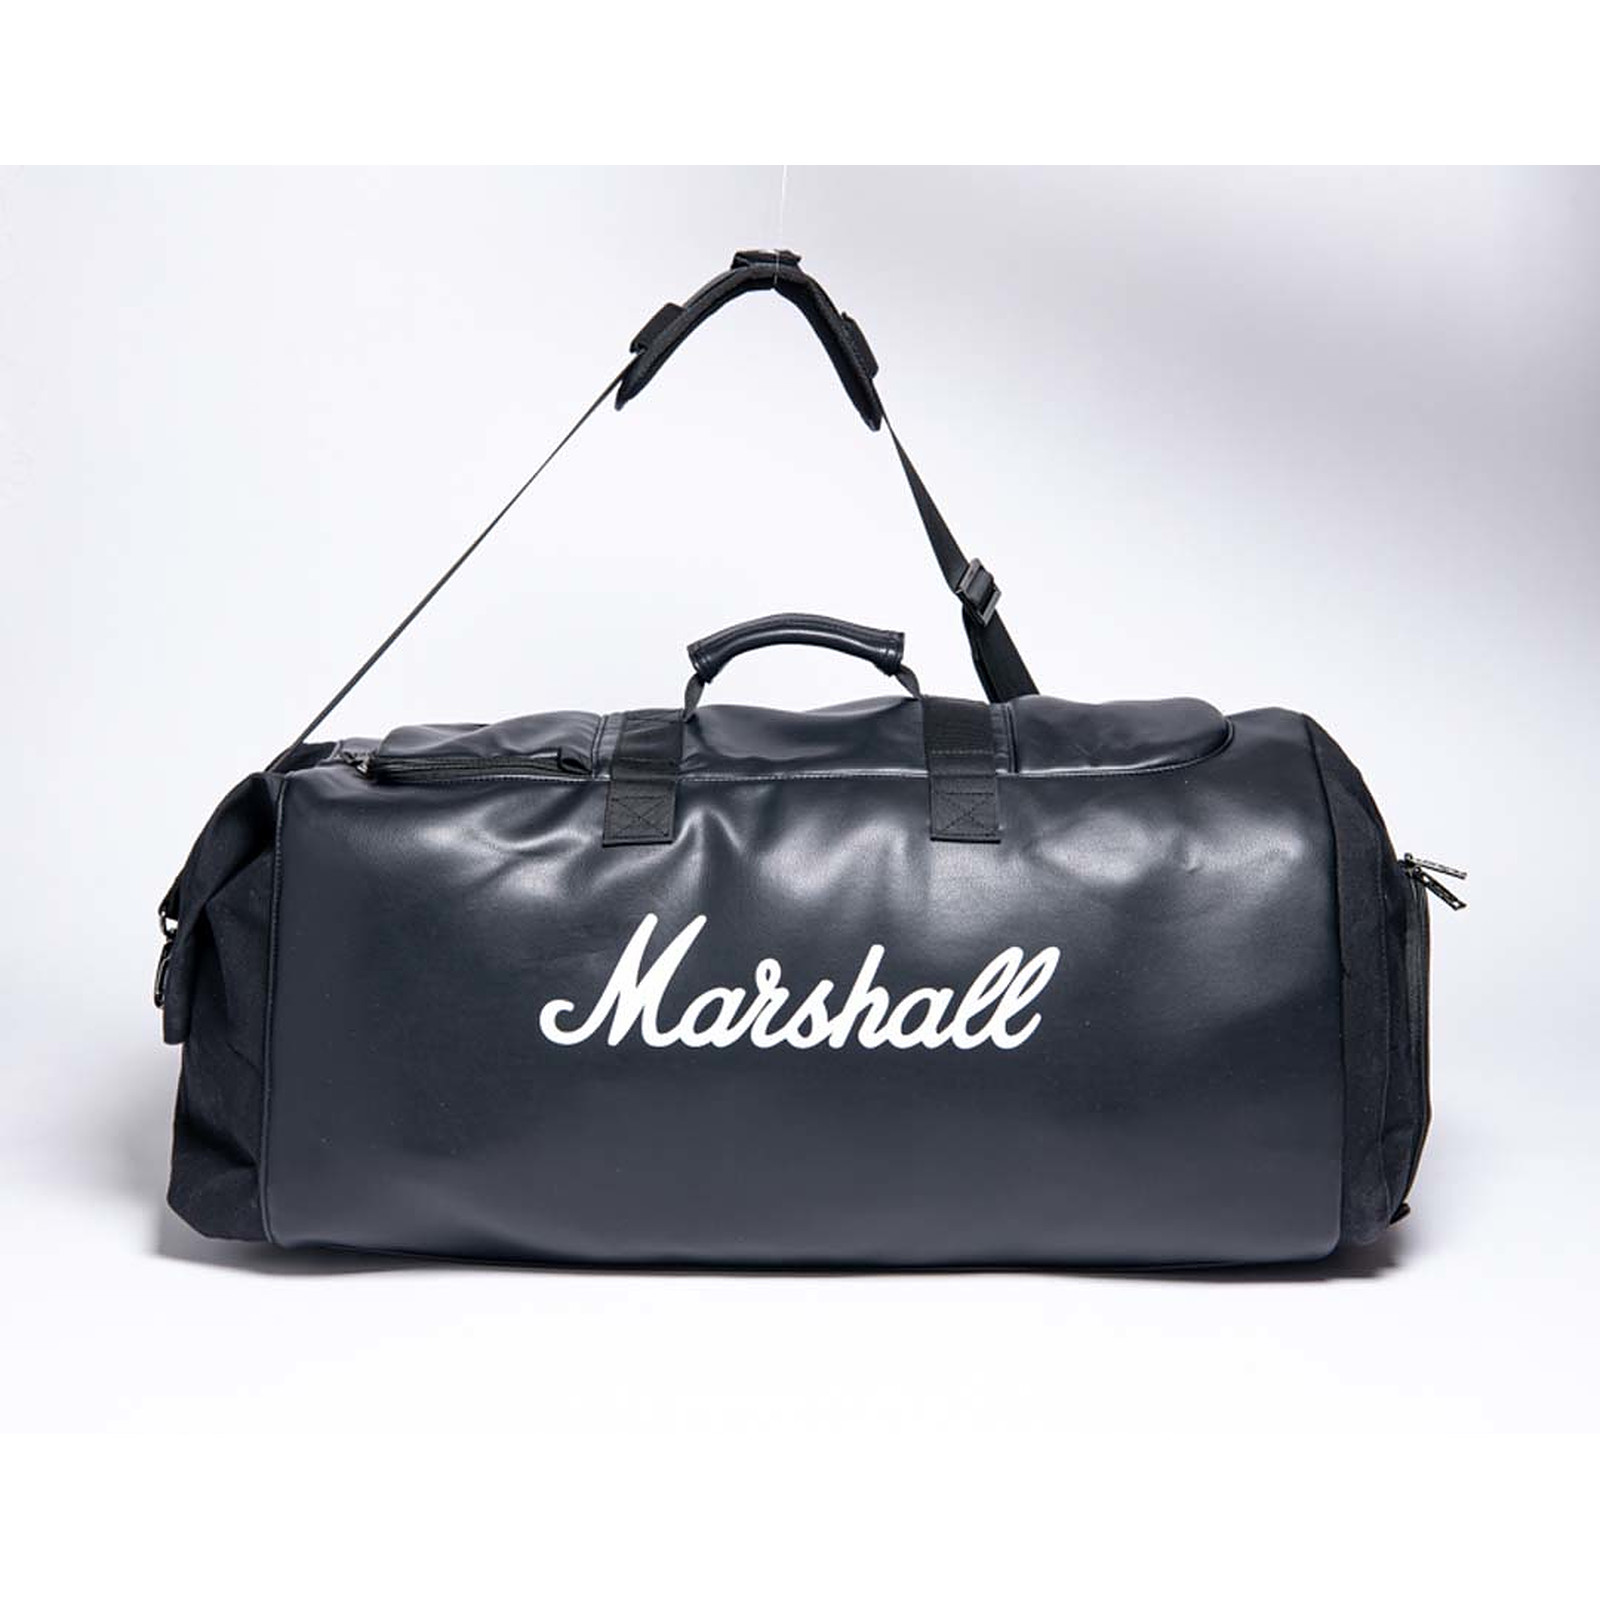 Marshall - grand sac de voyage / sport - Holdall